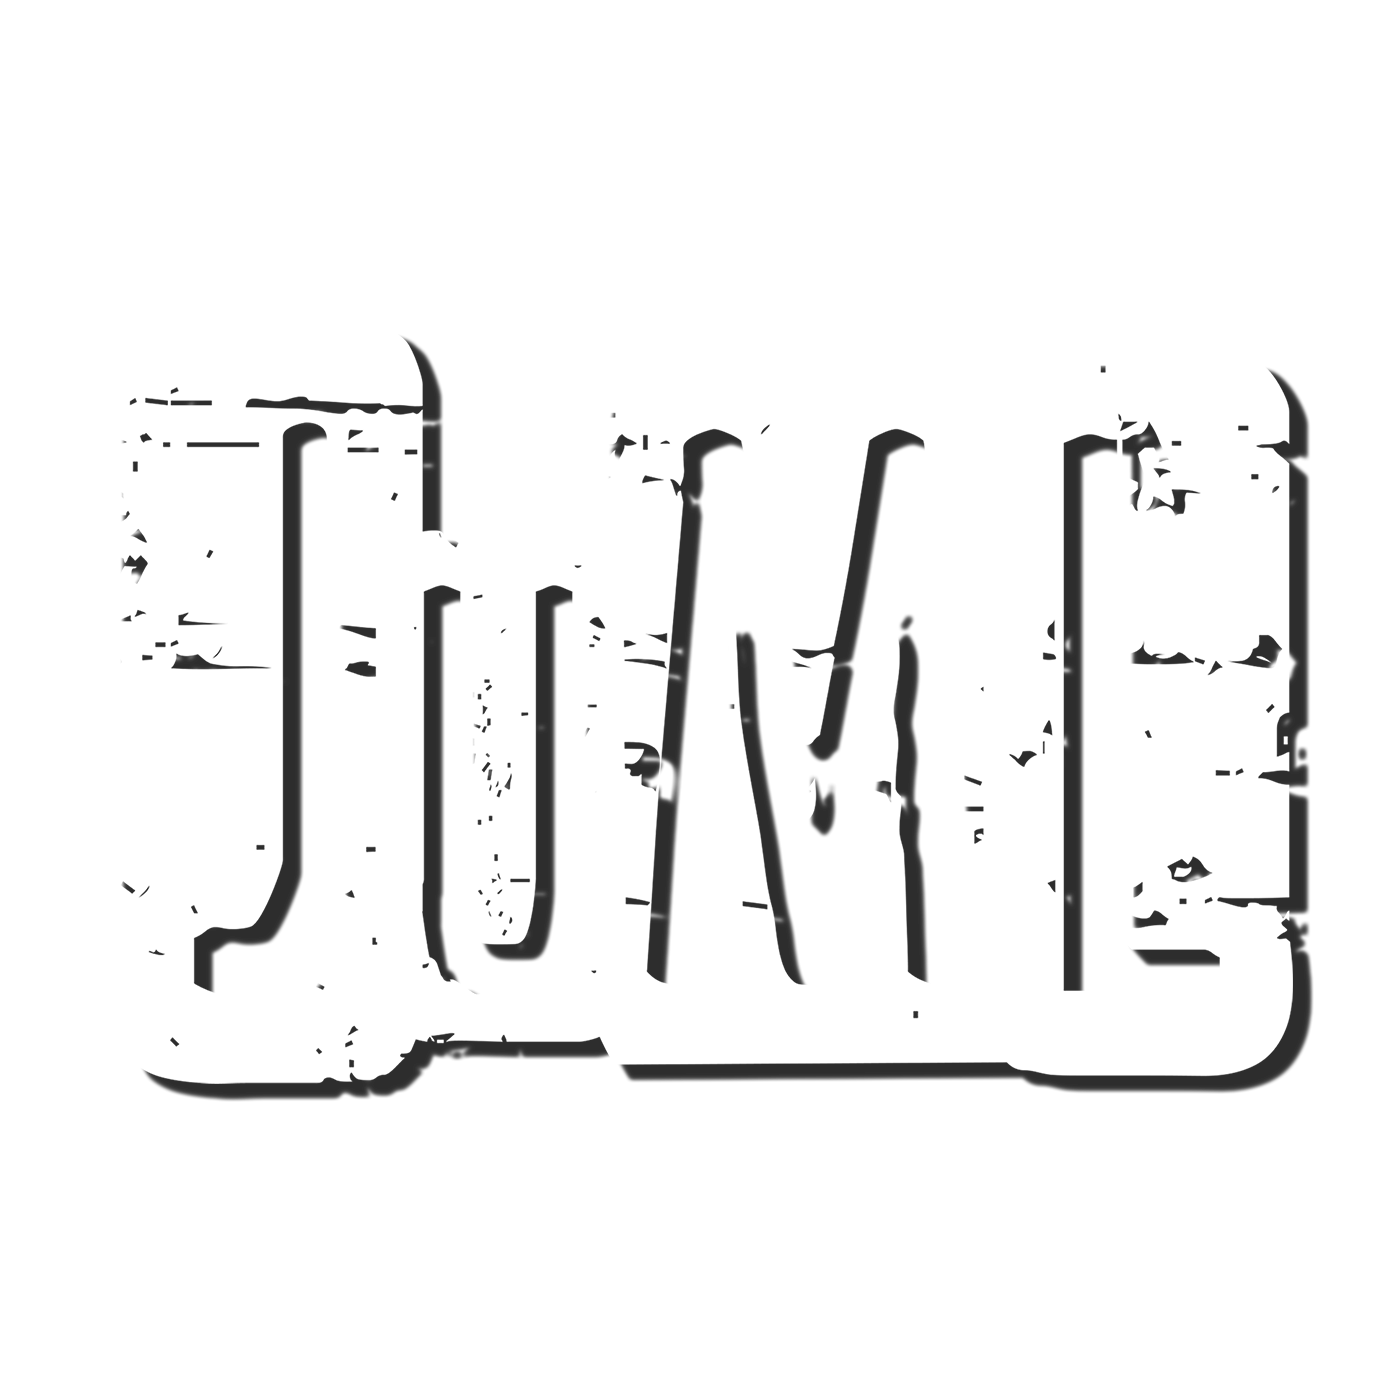 JuML || Jakob und Marie Louise